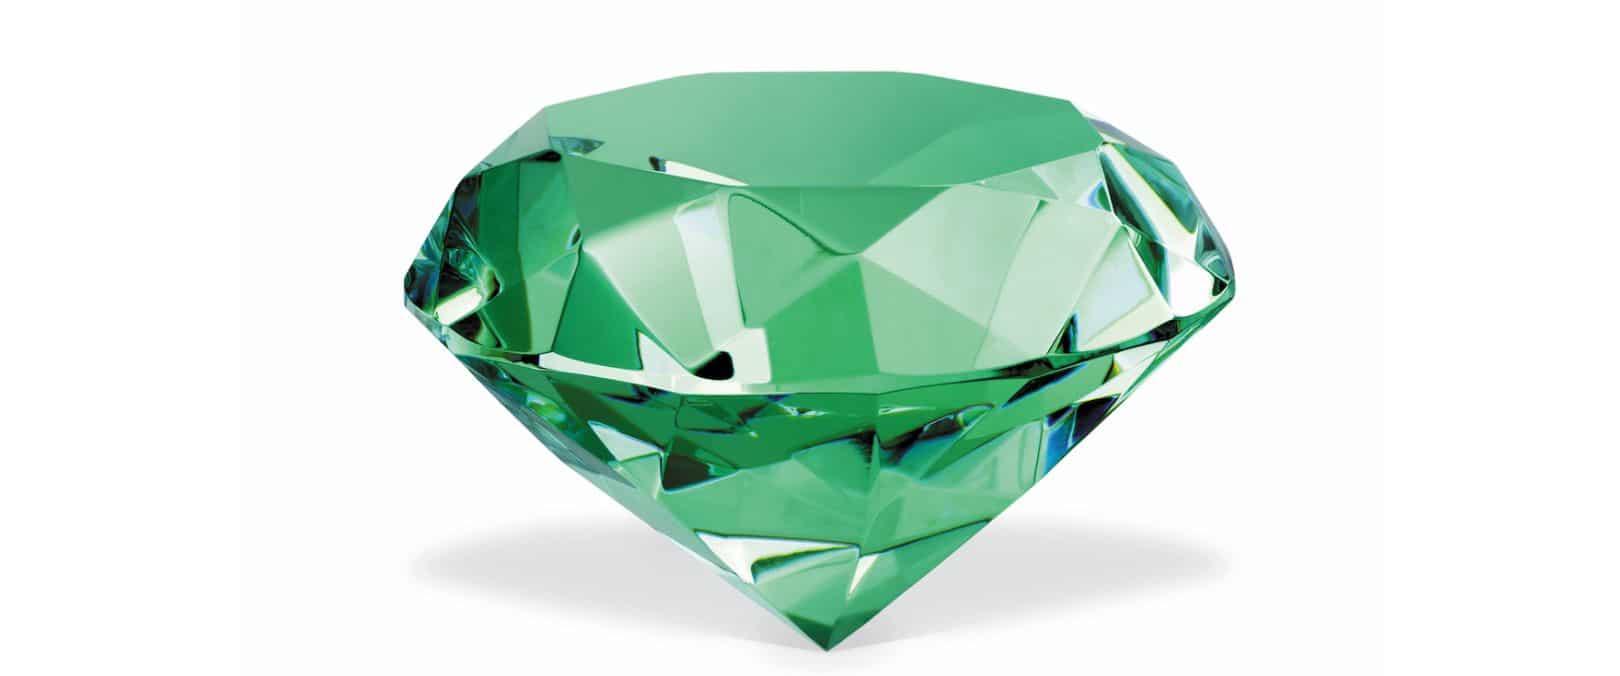 Close-up photograph of a brilliant green emerald.